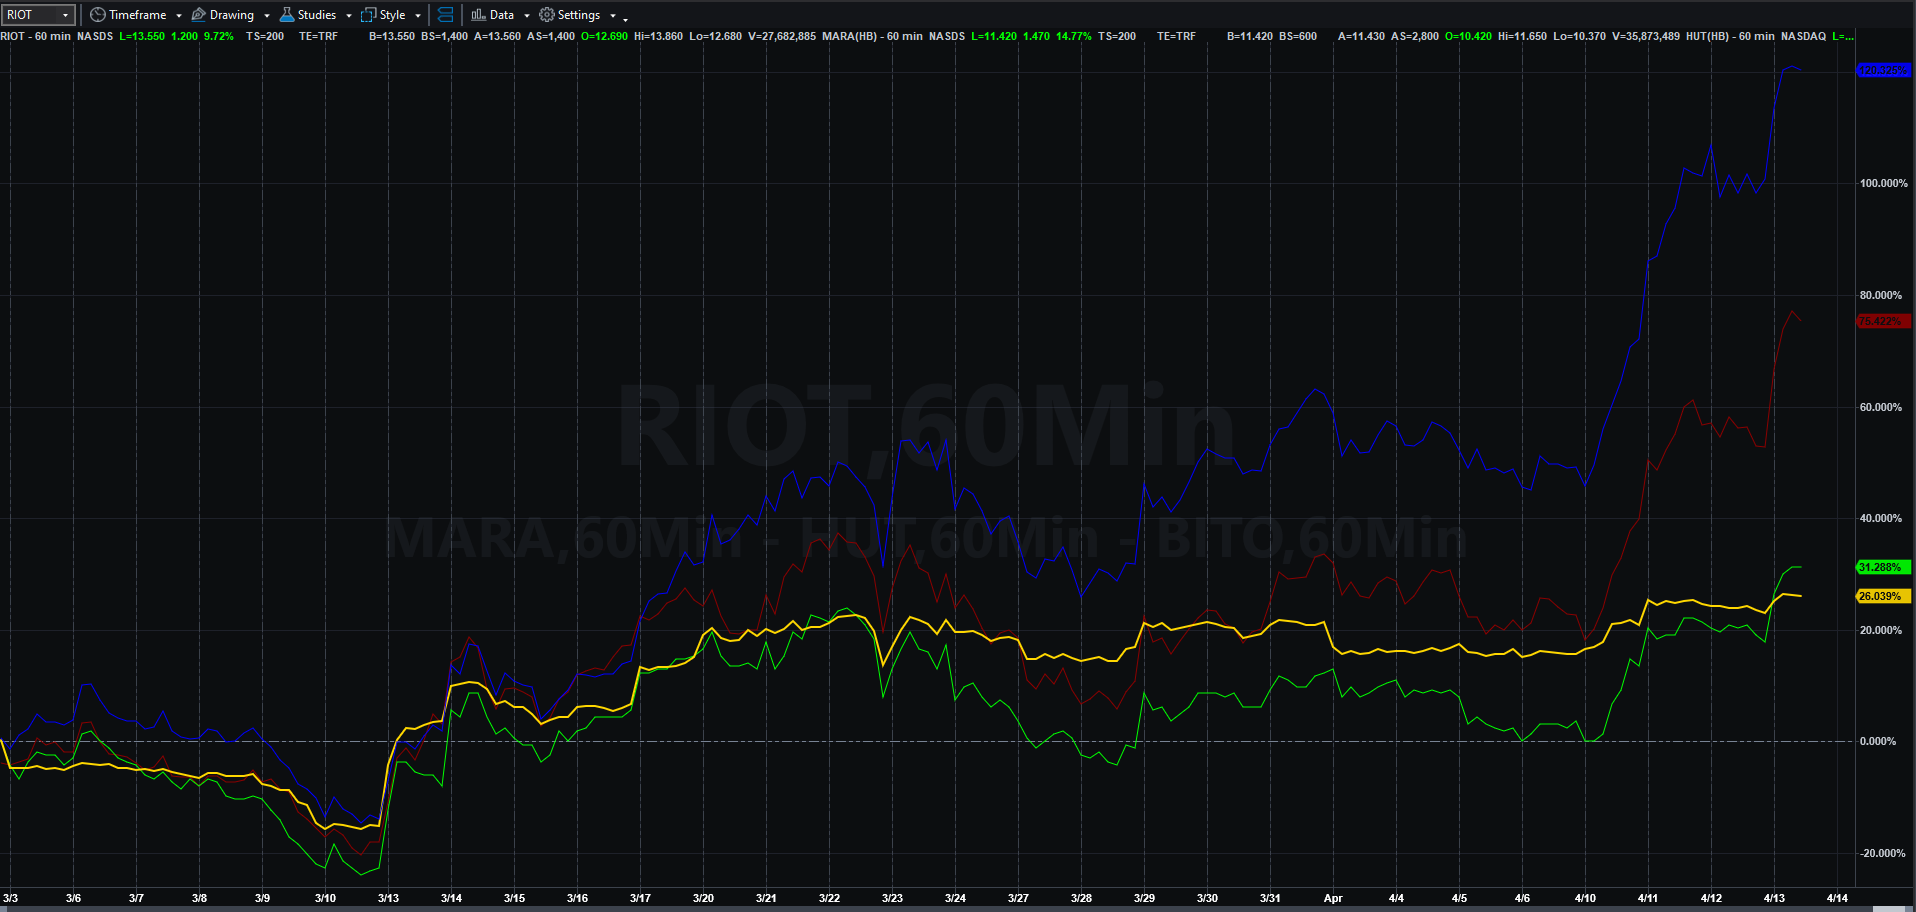 Roblox (RBLX) Brings $1 Billion Junk Sale in Bond Market Debut - Bloomberg